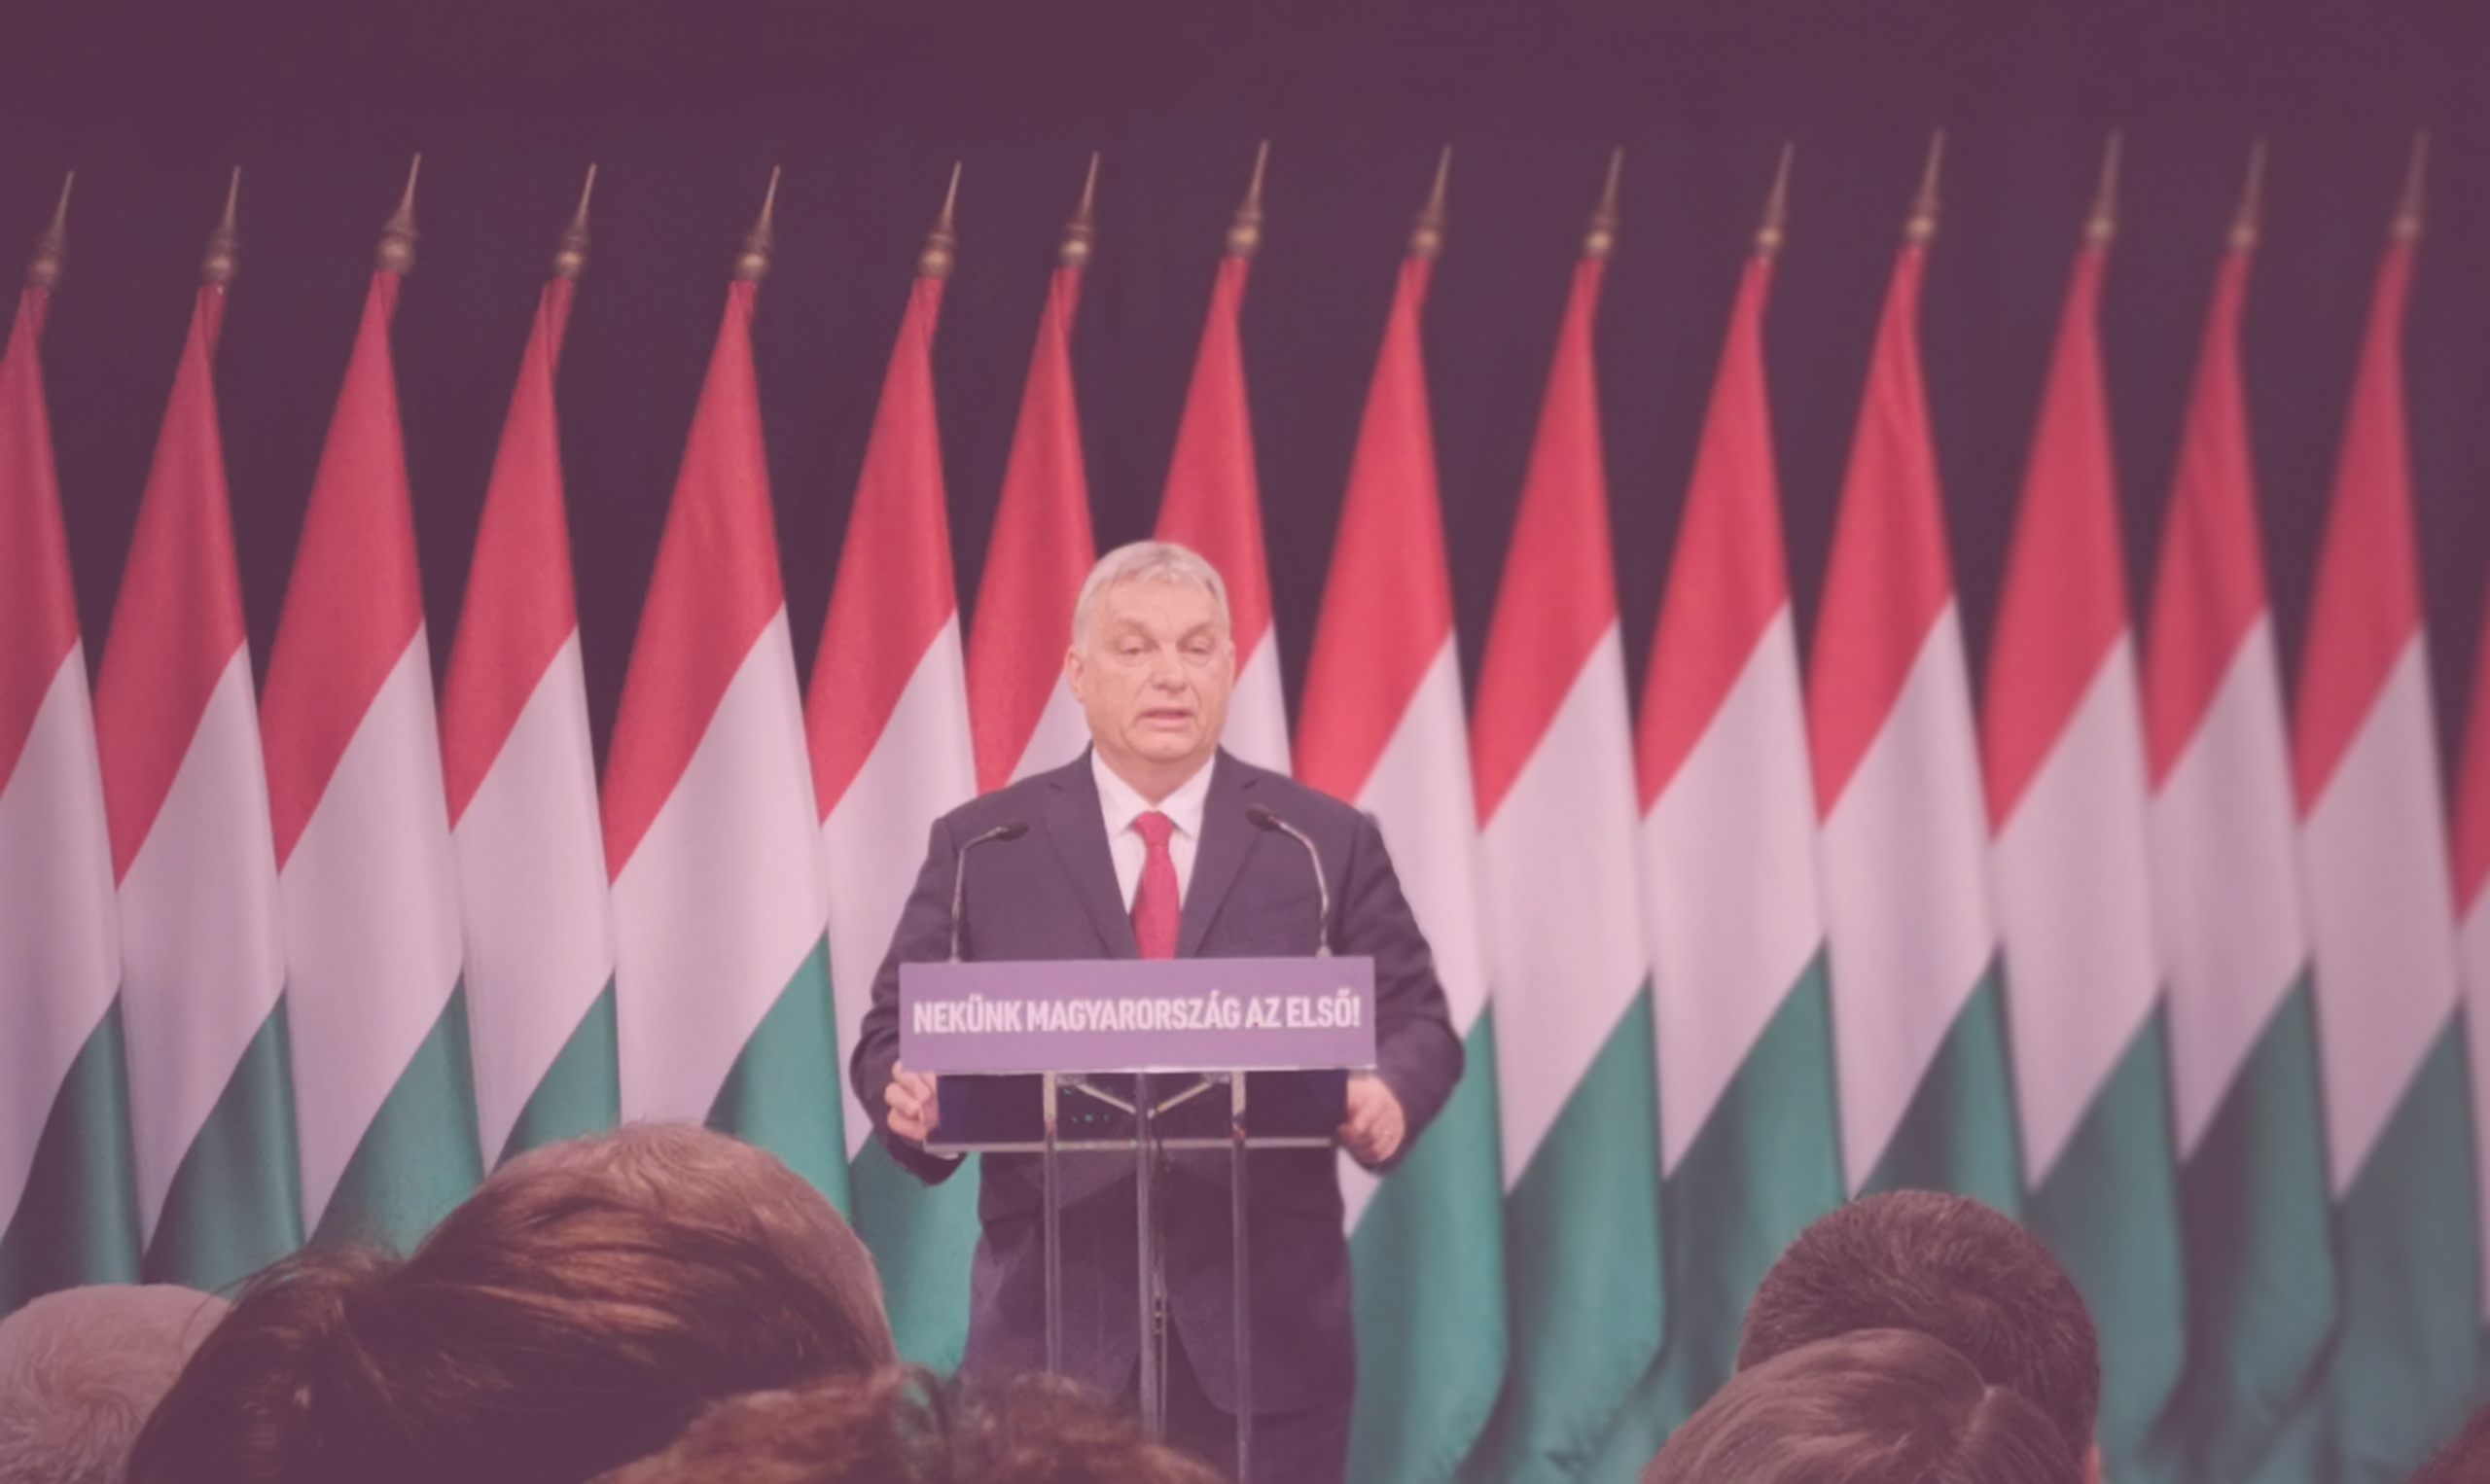 István Grajczjár, Zsófia Nagy and Antal Örkény – Types of Solidarity in a Hybrid Regime: The Hungarian Case